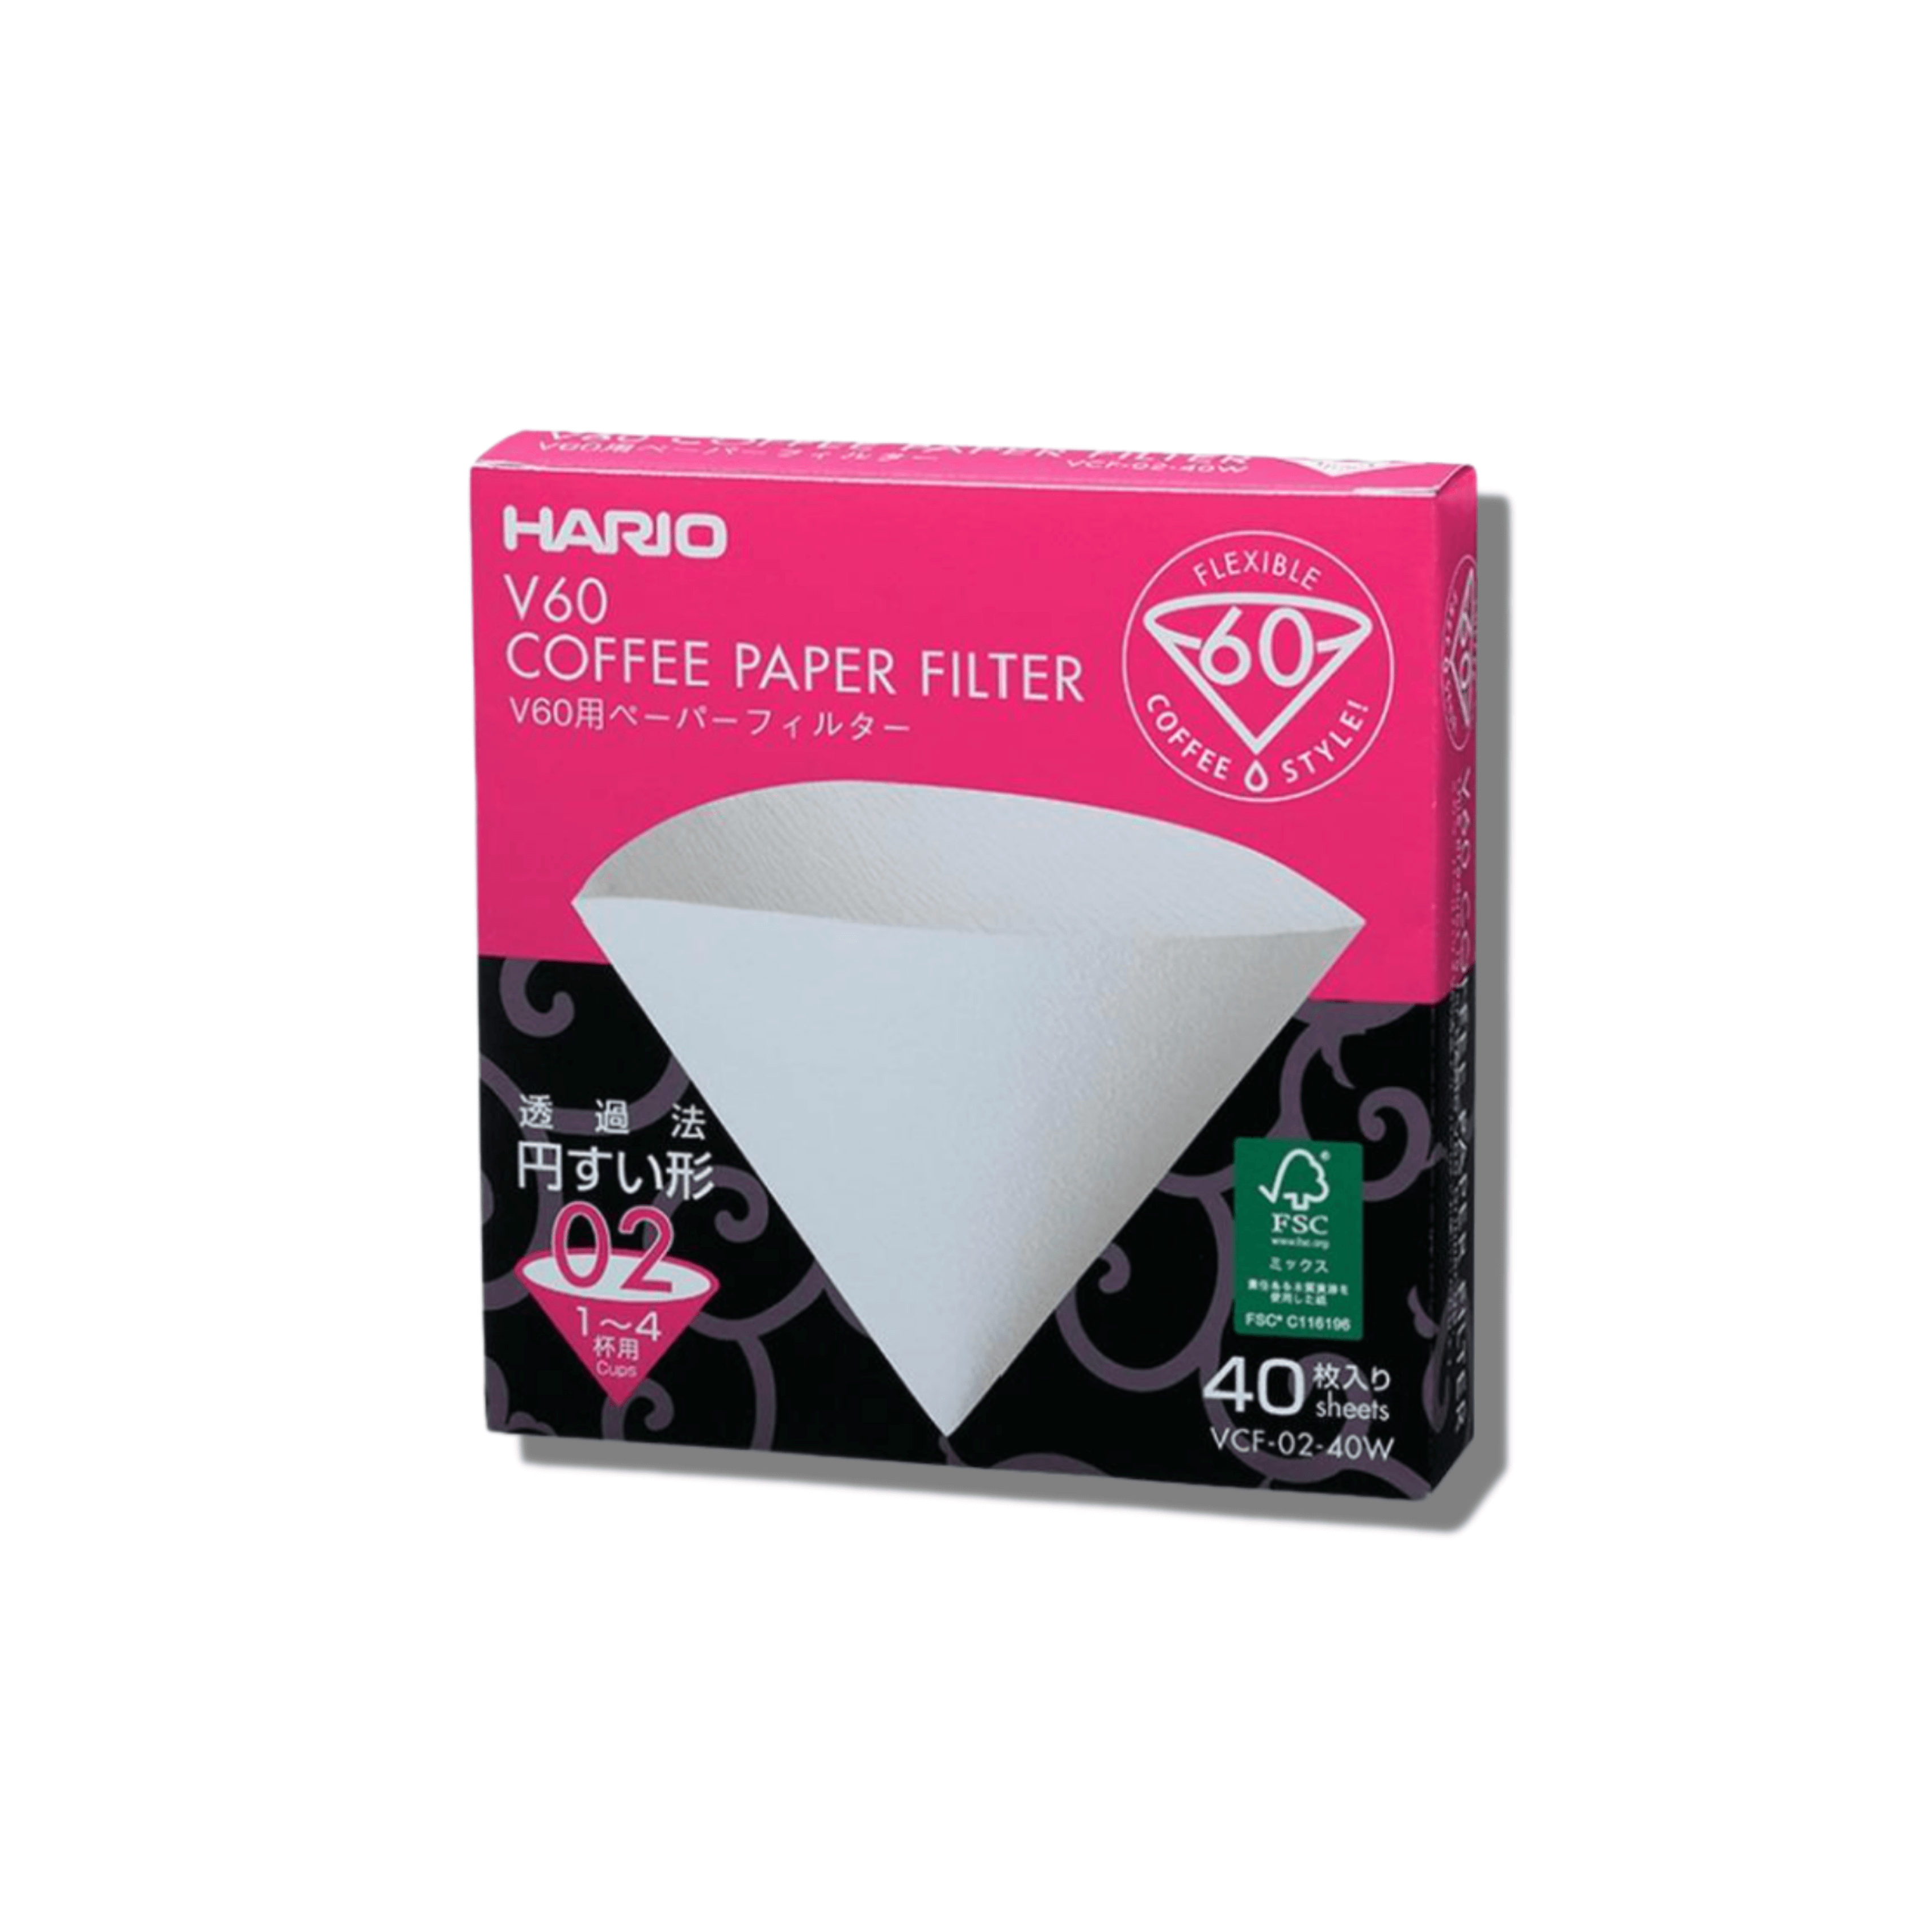 Hario Paper Filter